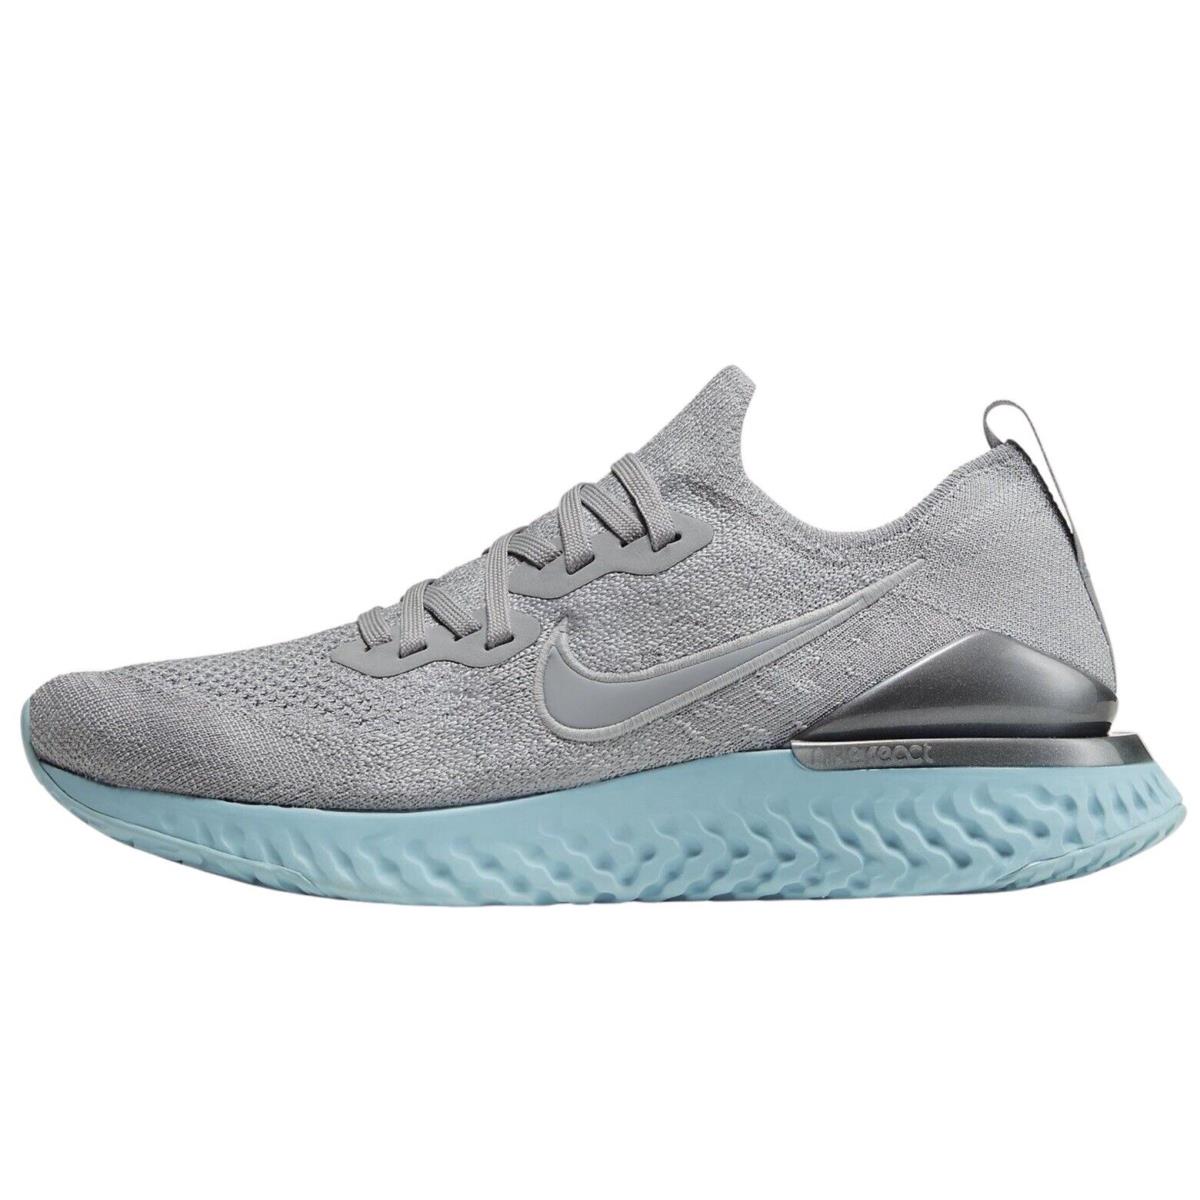 Nike Epic React Flyknit 2 Womens BQ8927-007 Wolf Grey Ocean Bliss Shoes Size 6